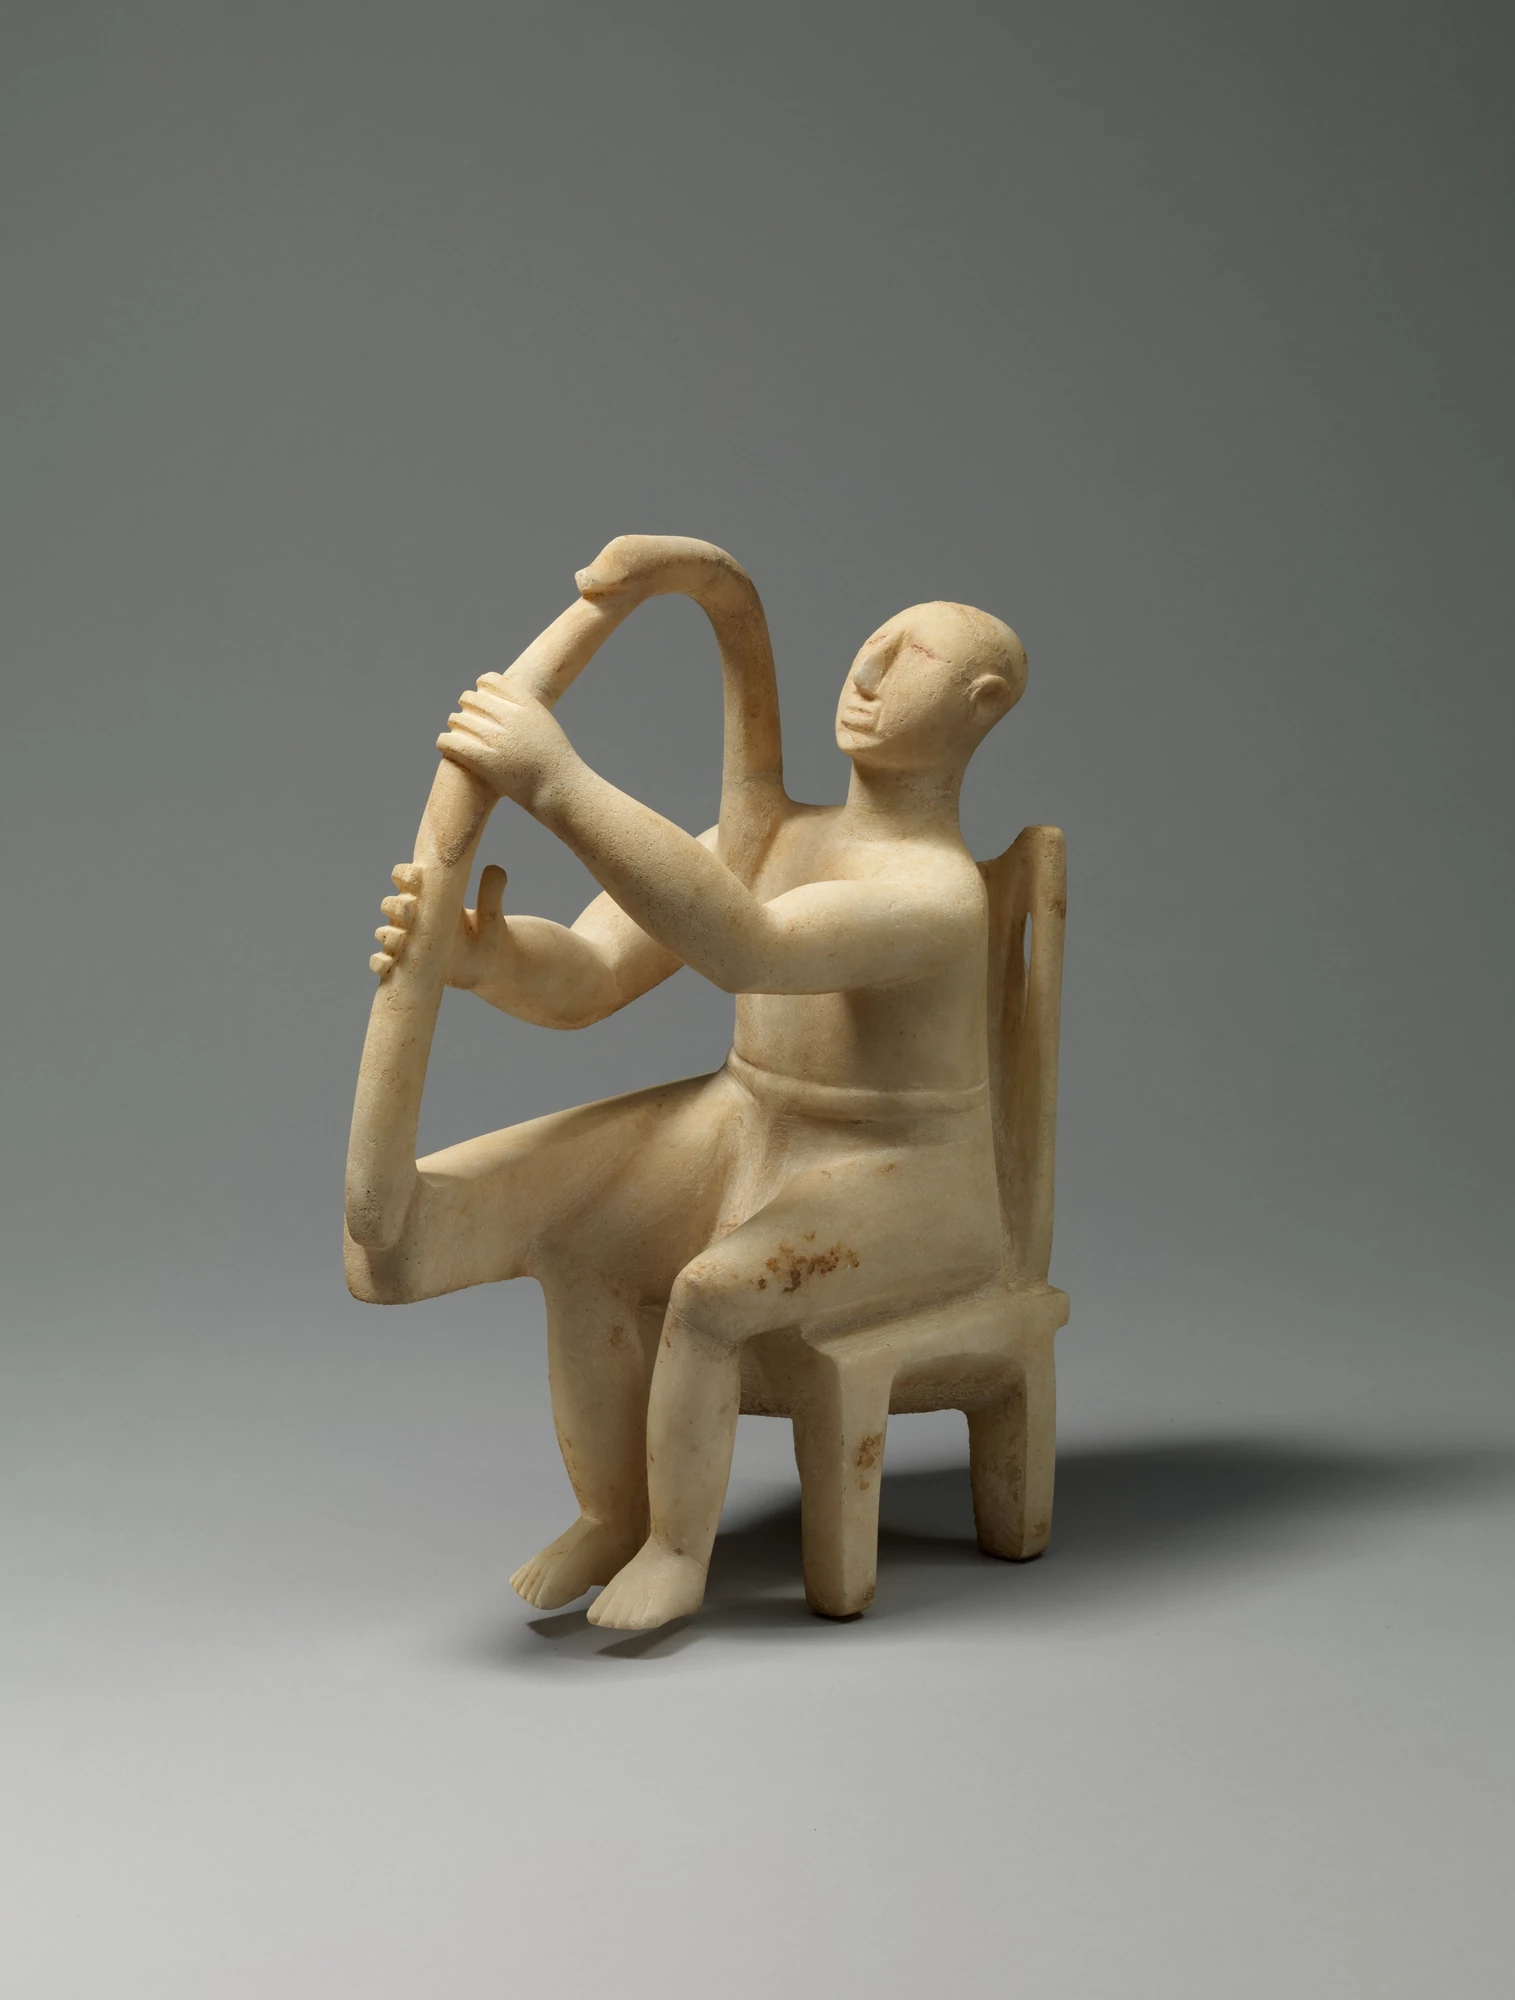 Cycladic seated harp player, Aegean Civilizations